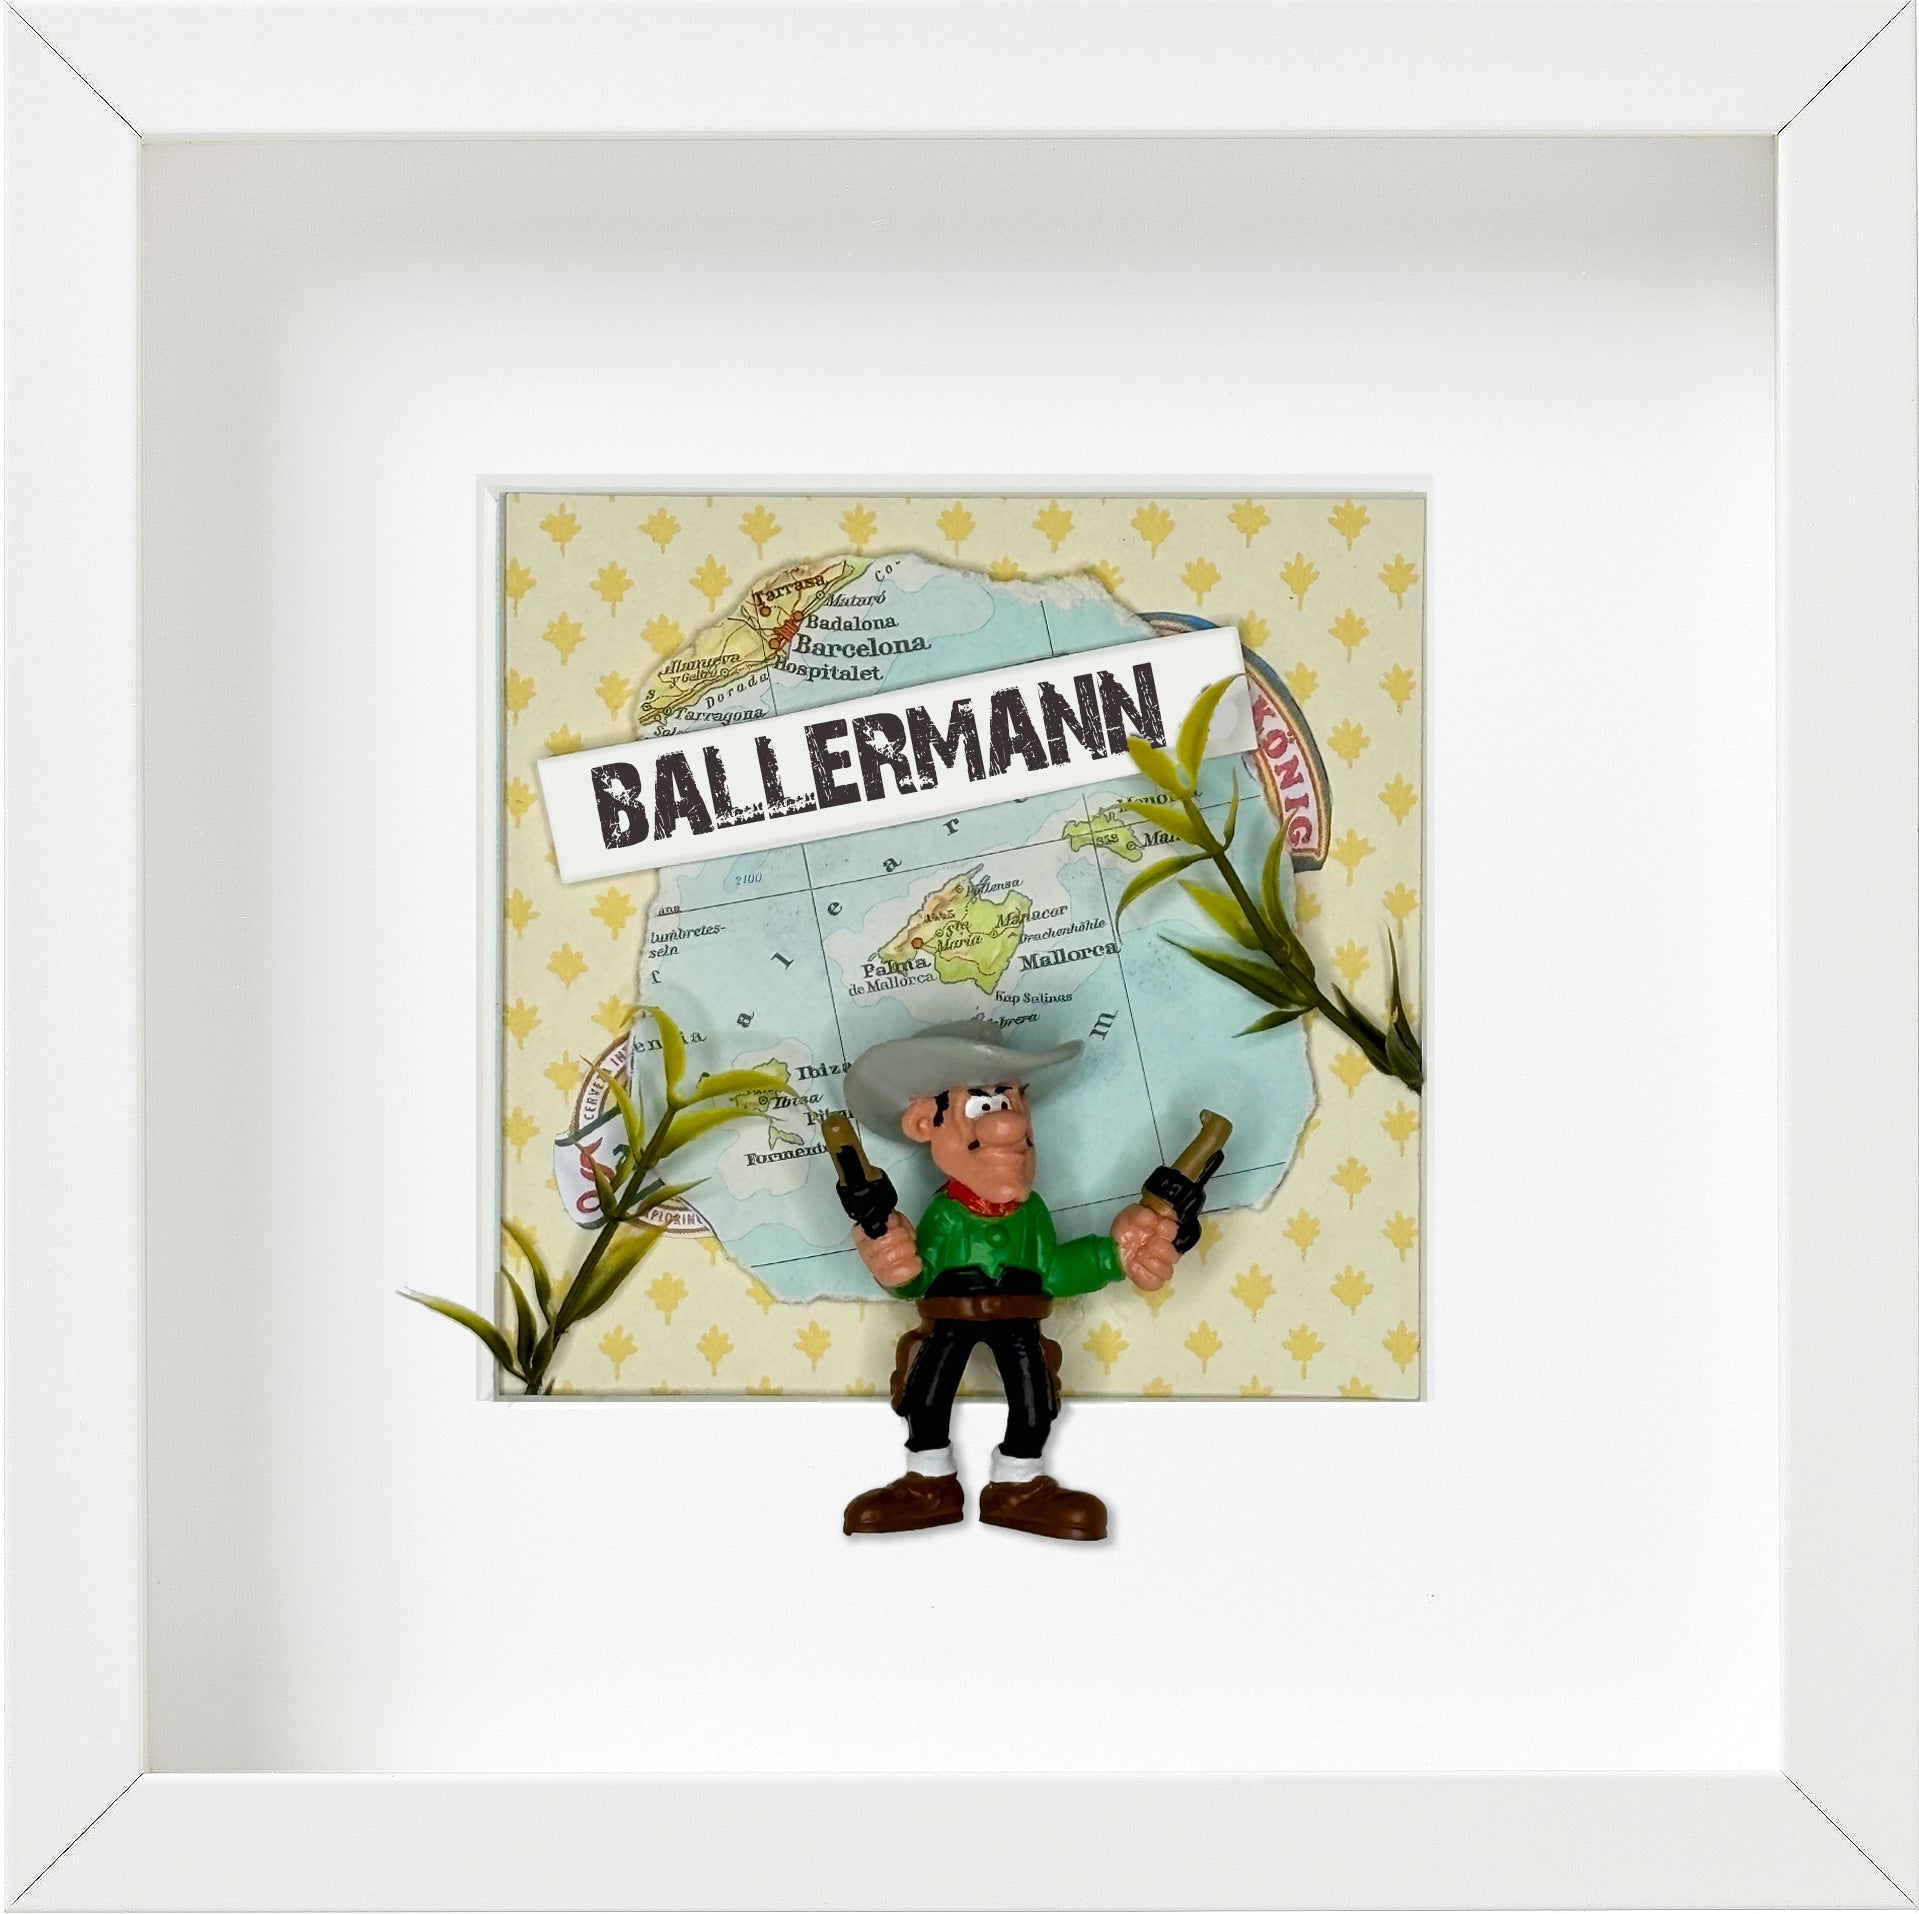 Ballermann